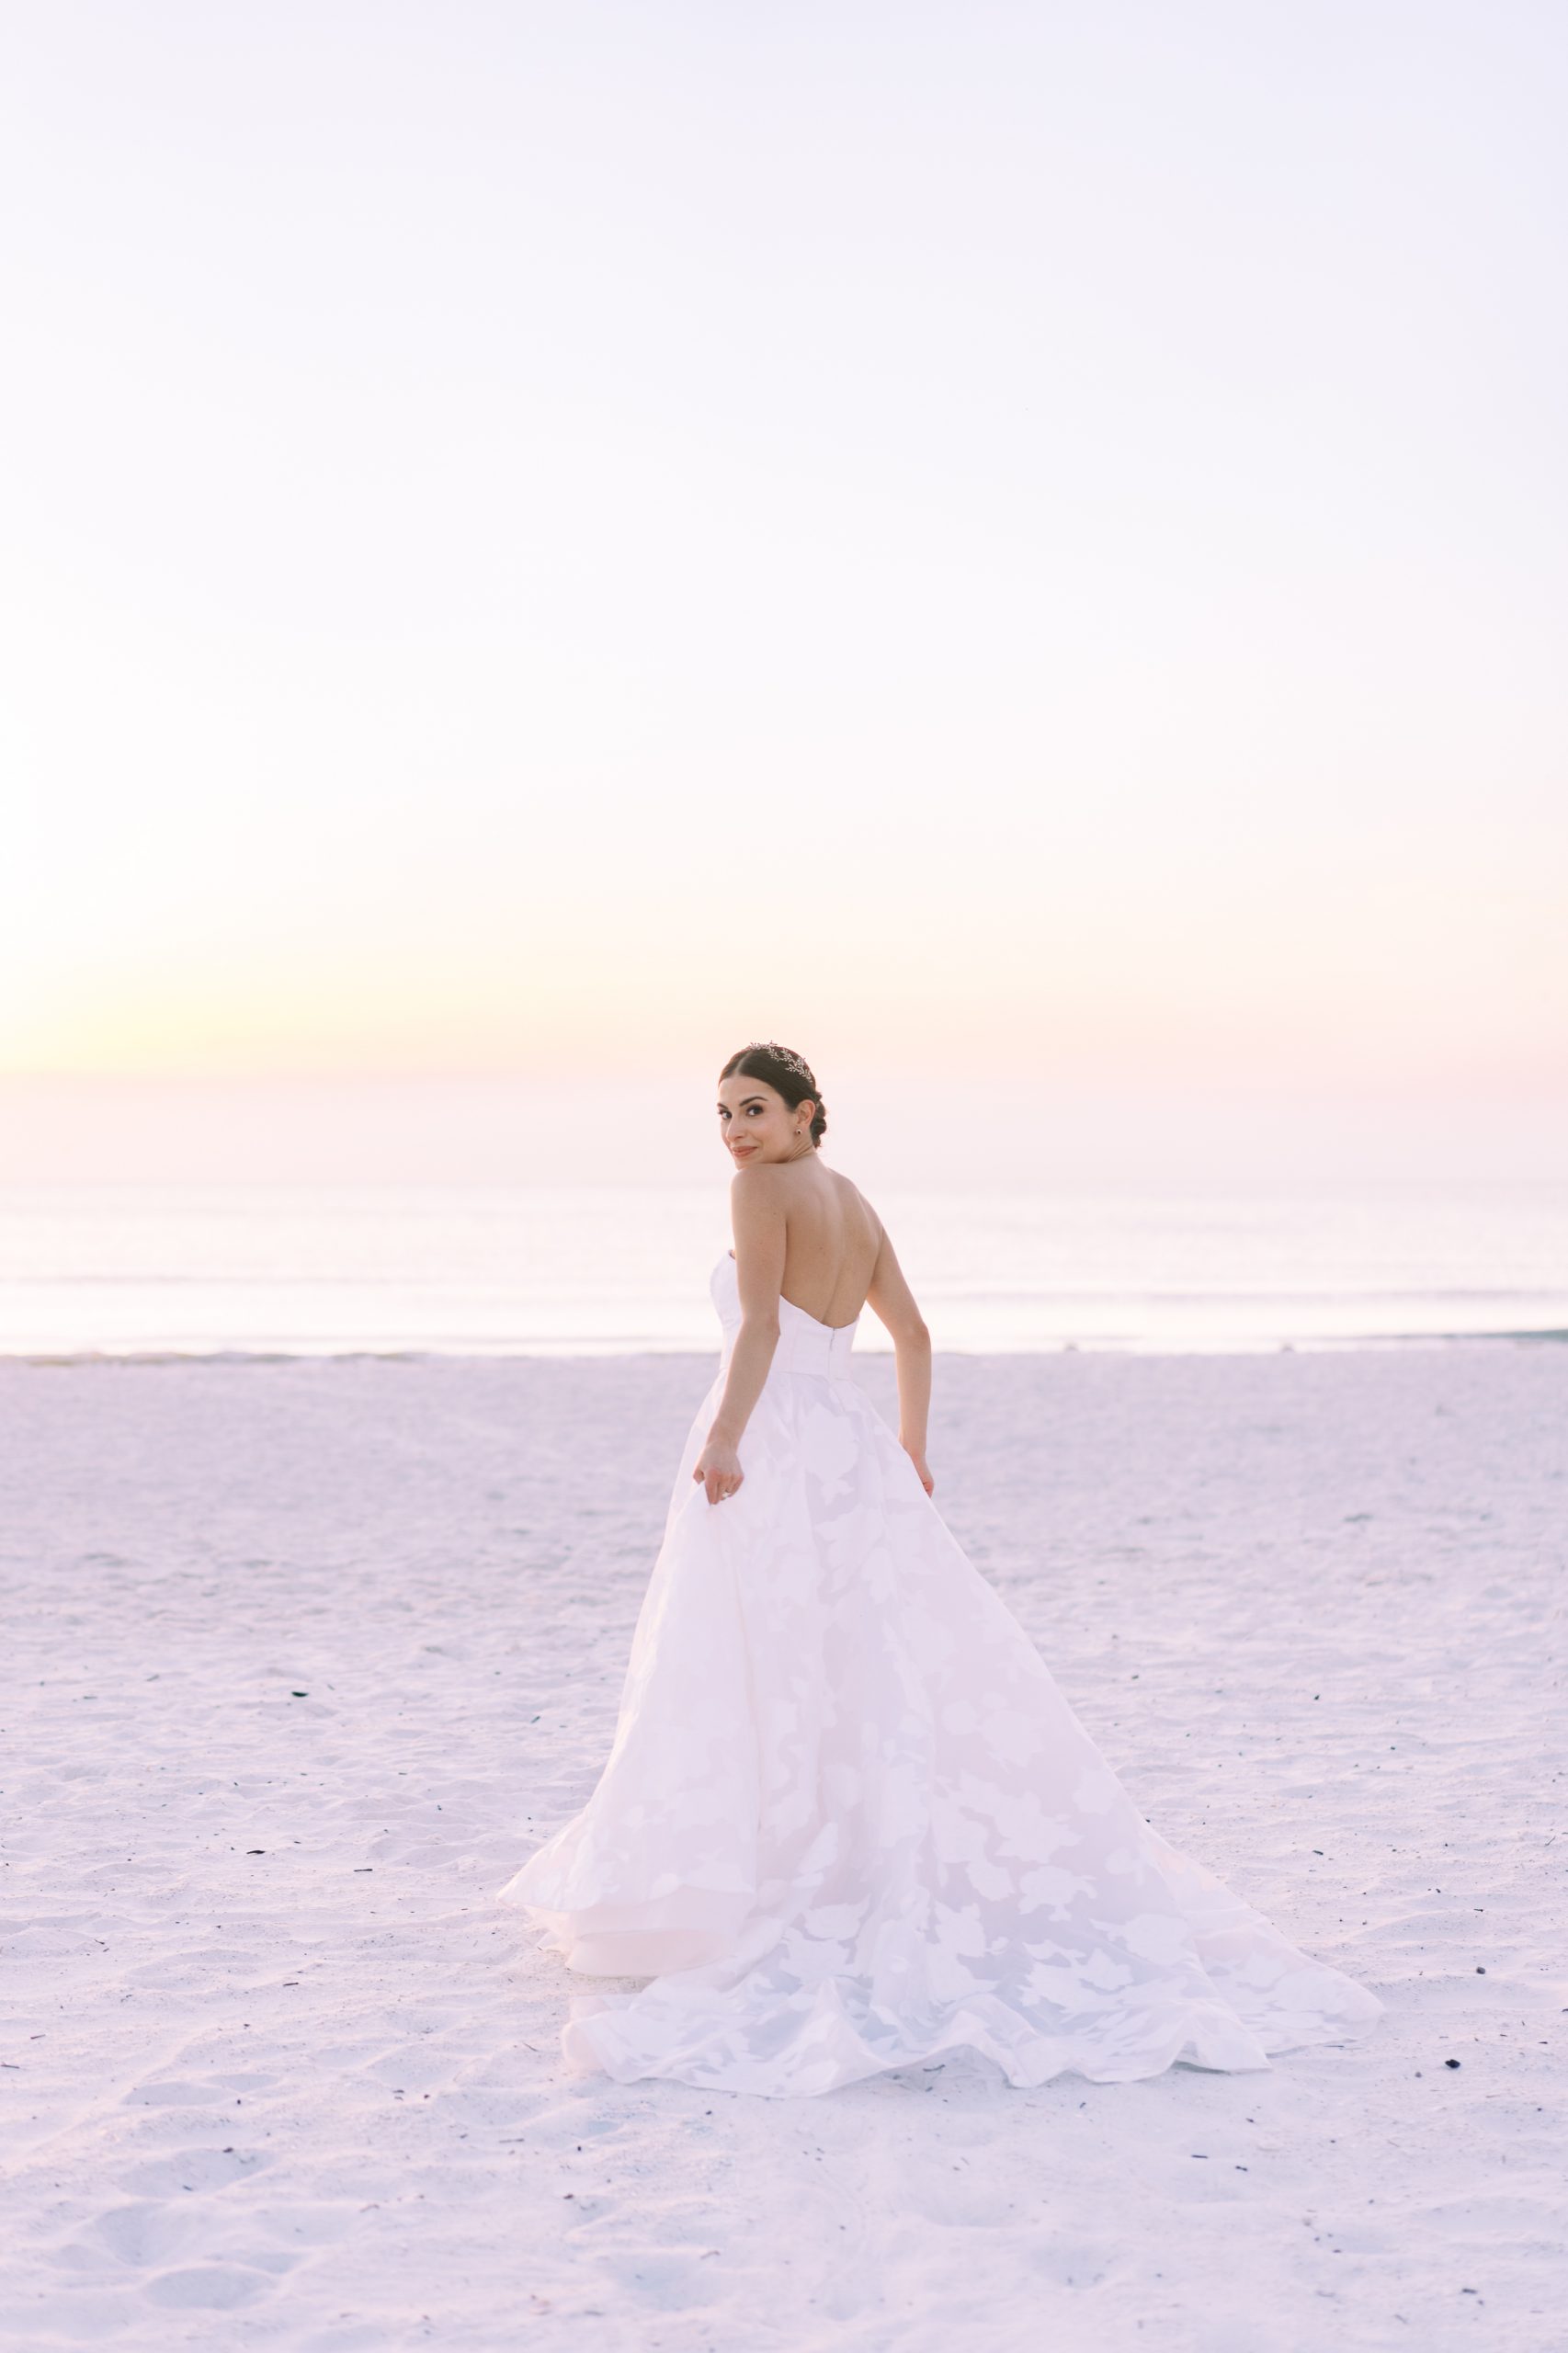 Bride on beach at sunset